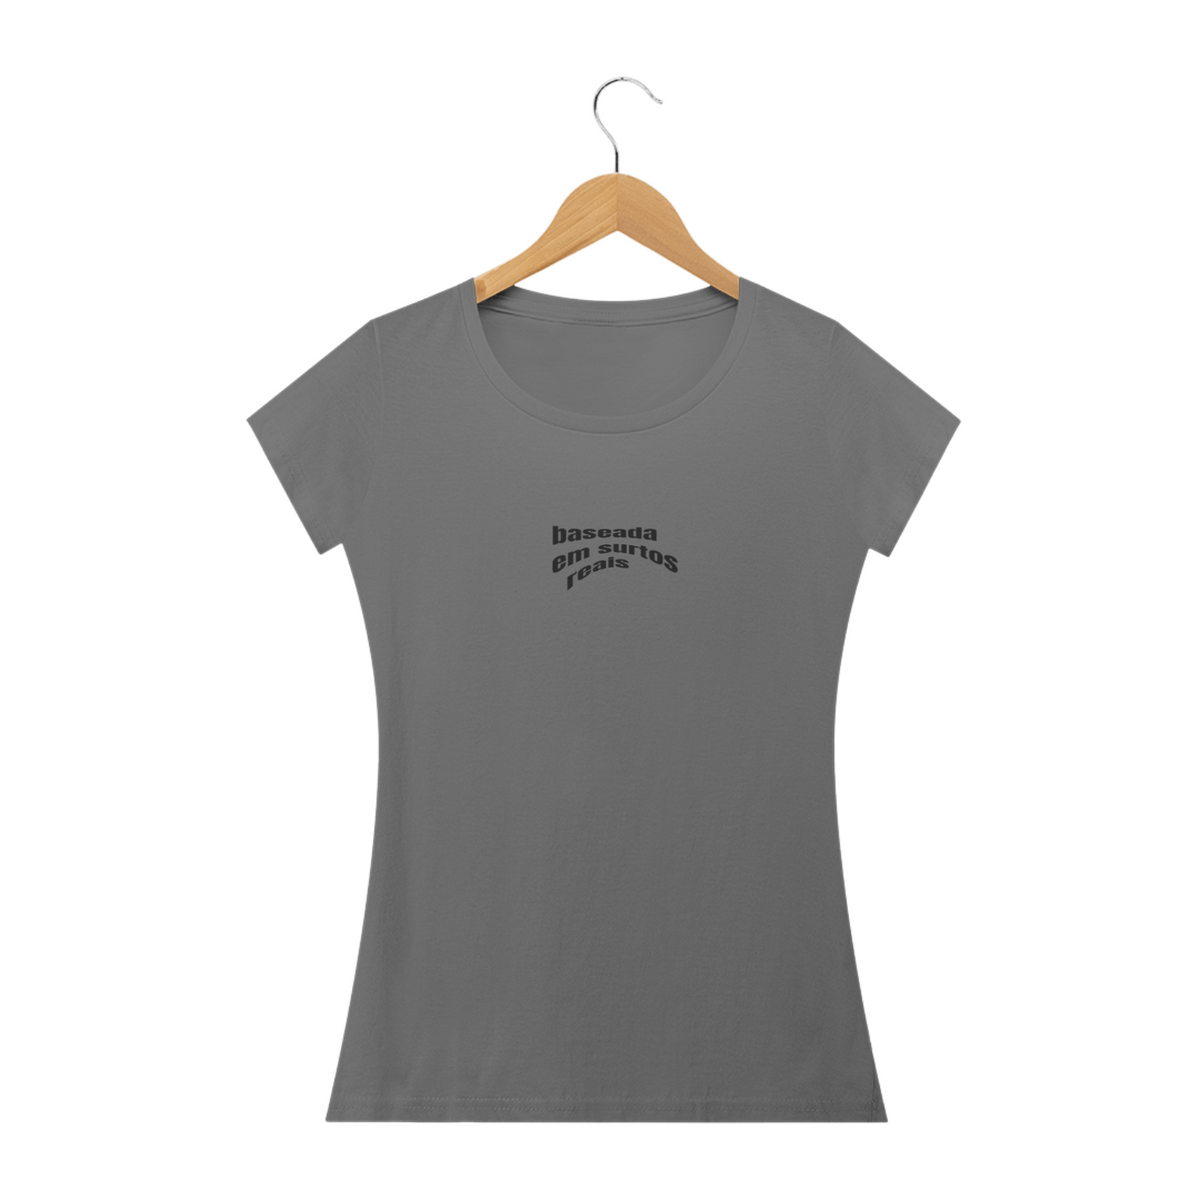 Nome do produto: Camiseta Estonada BabyLook Feminina | Baseada em surtos reais - Frazziei